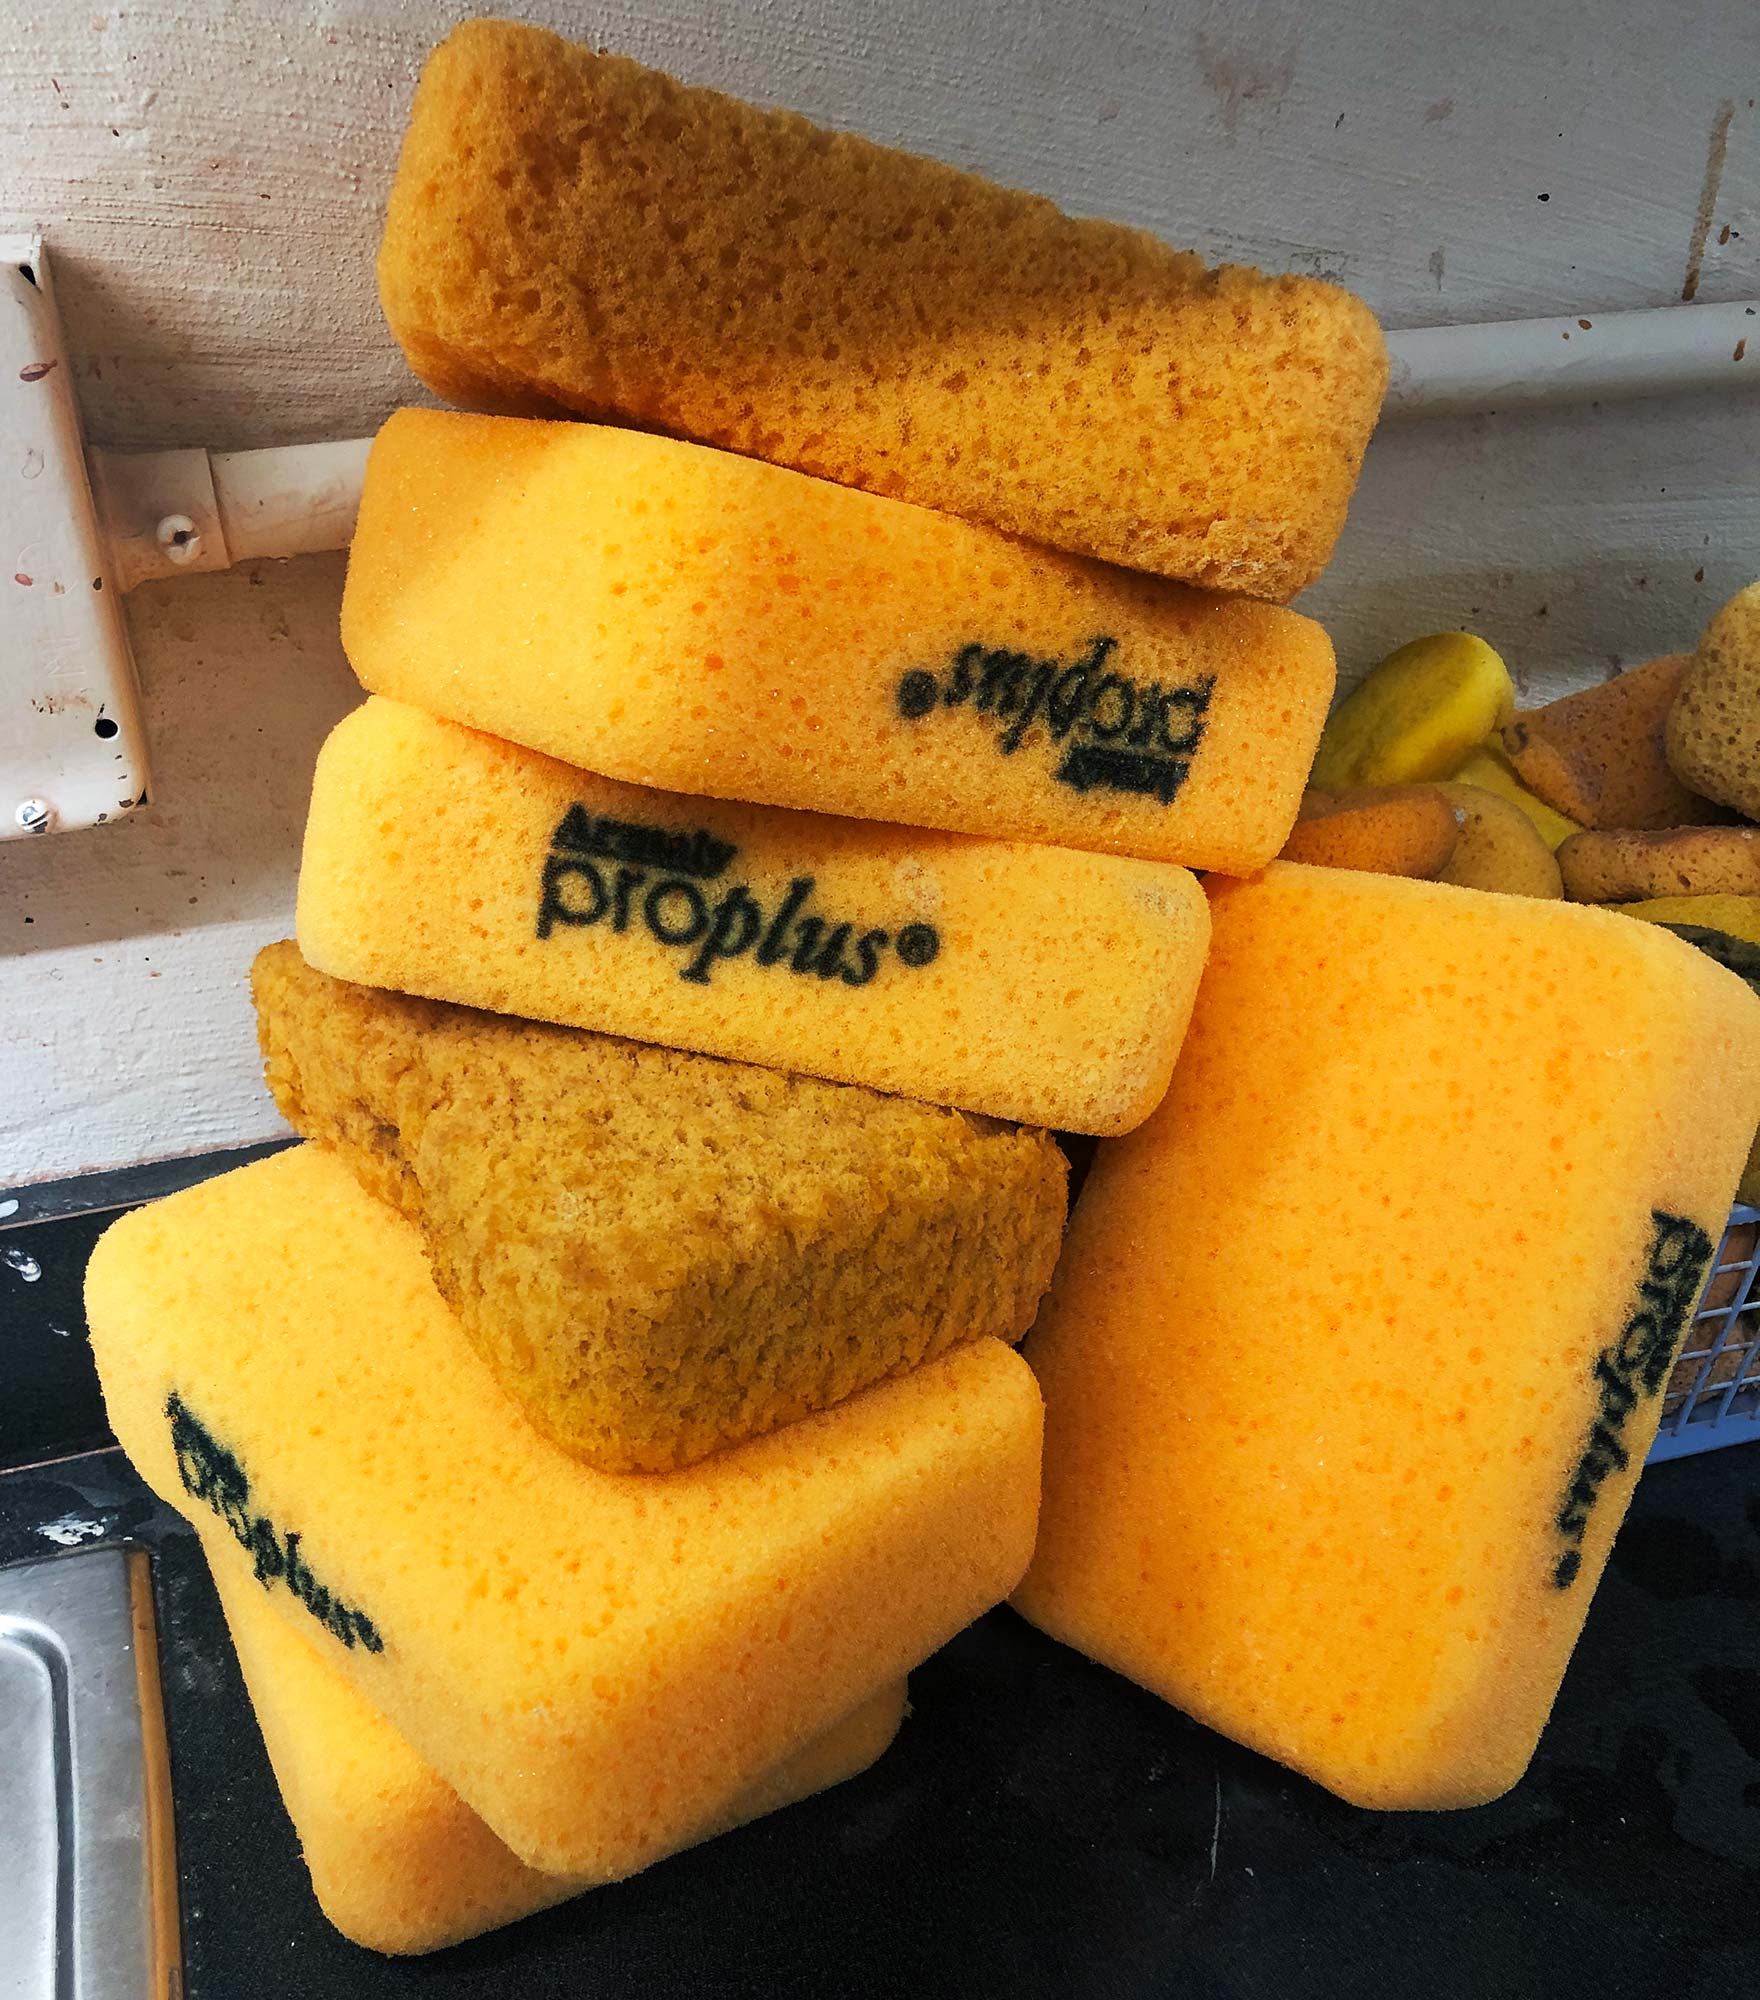 Large Sponge